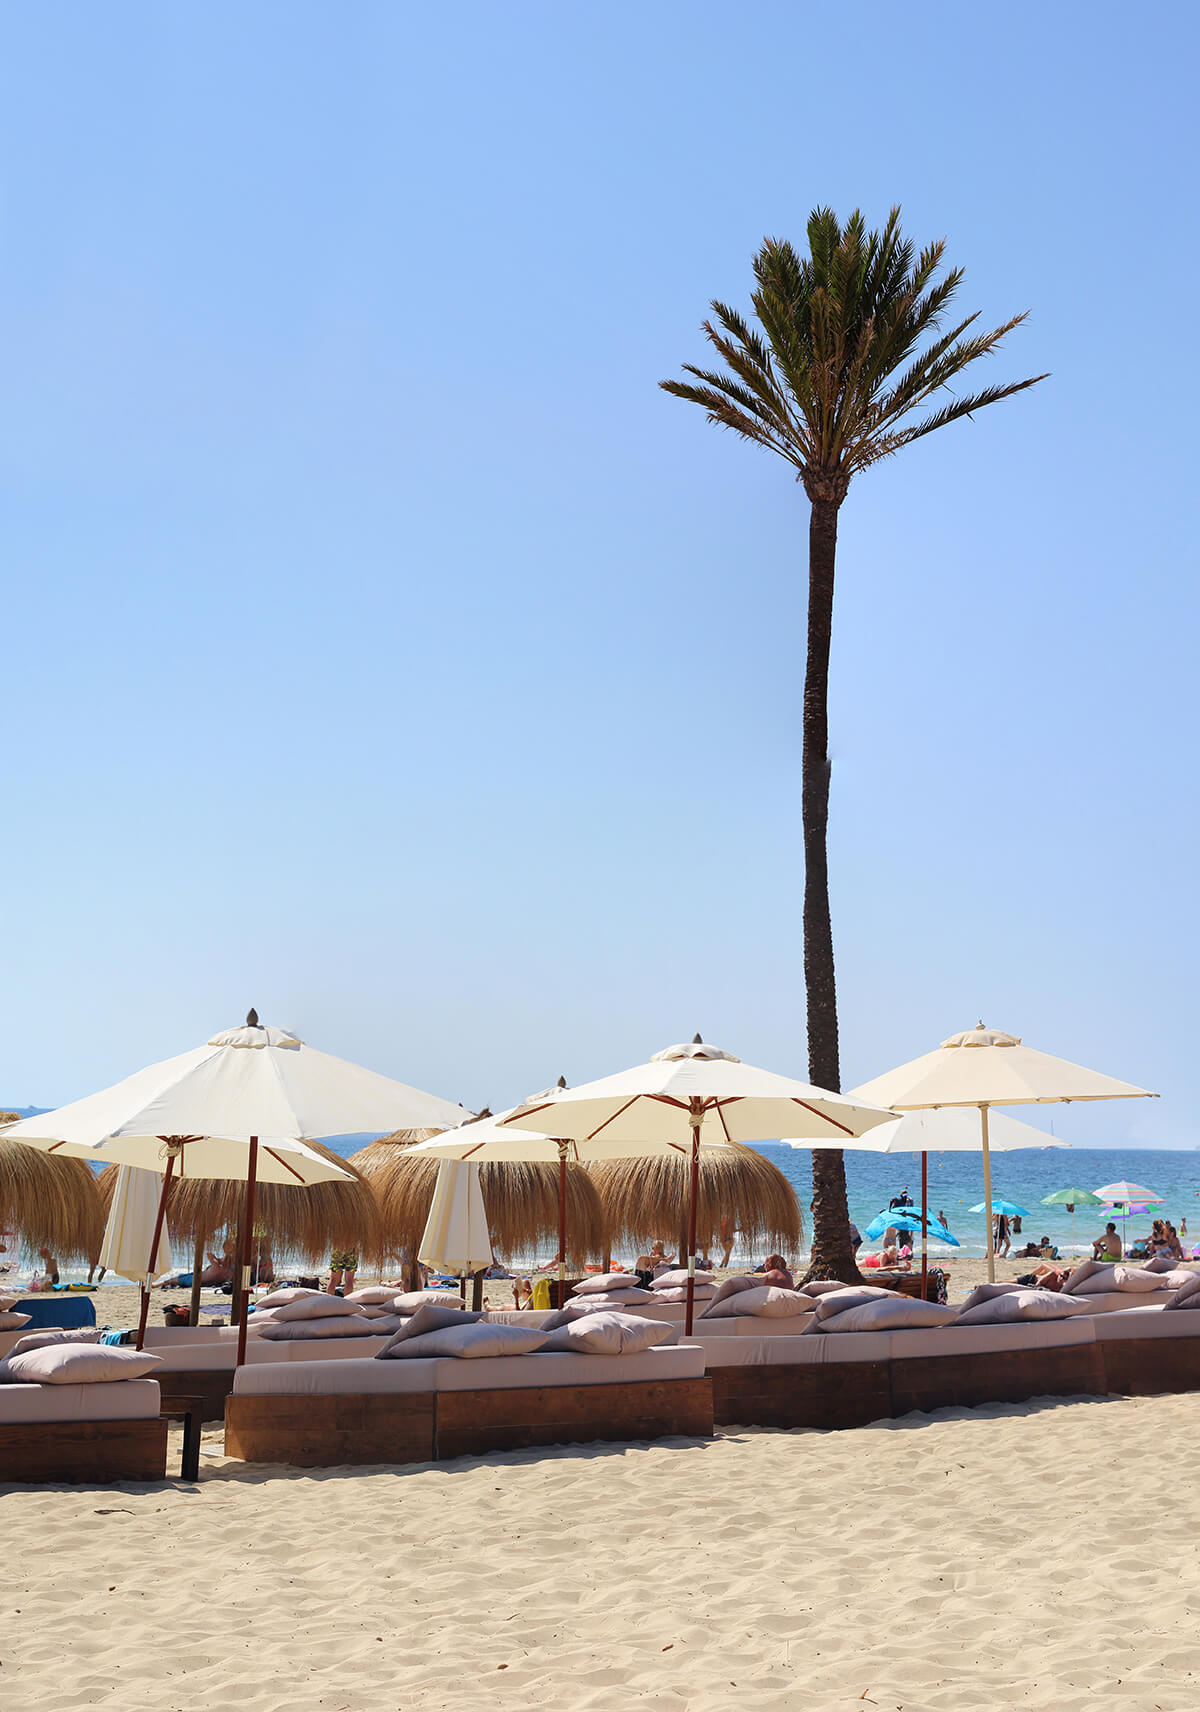 Luxury beach club with plush sunbeds and a tall palm tree set against a blue sky